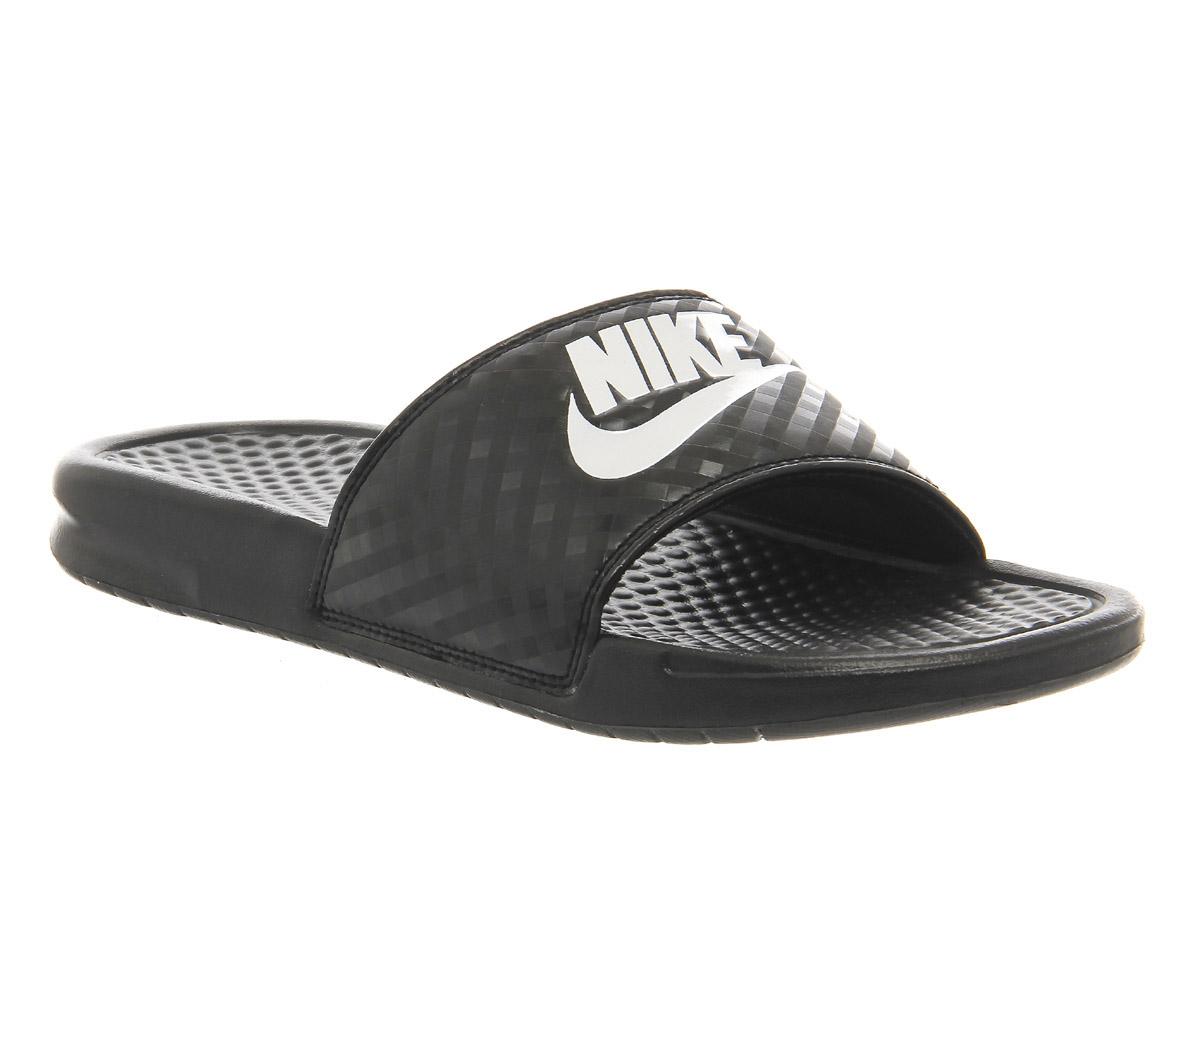 Nike Wmns Benassi Black White - Sandals